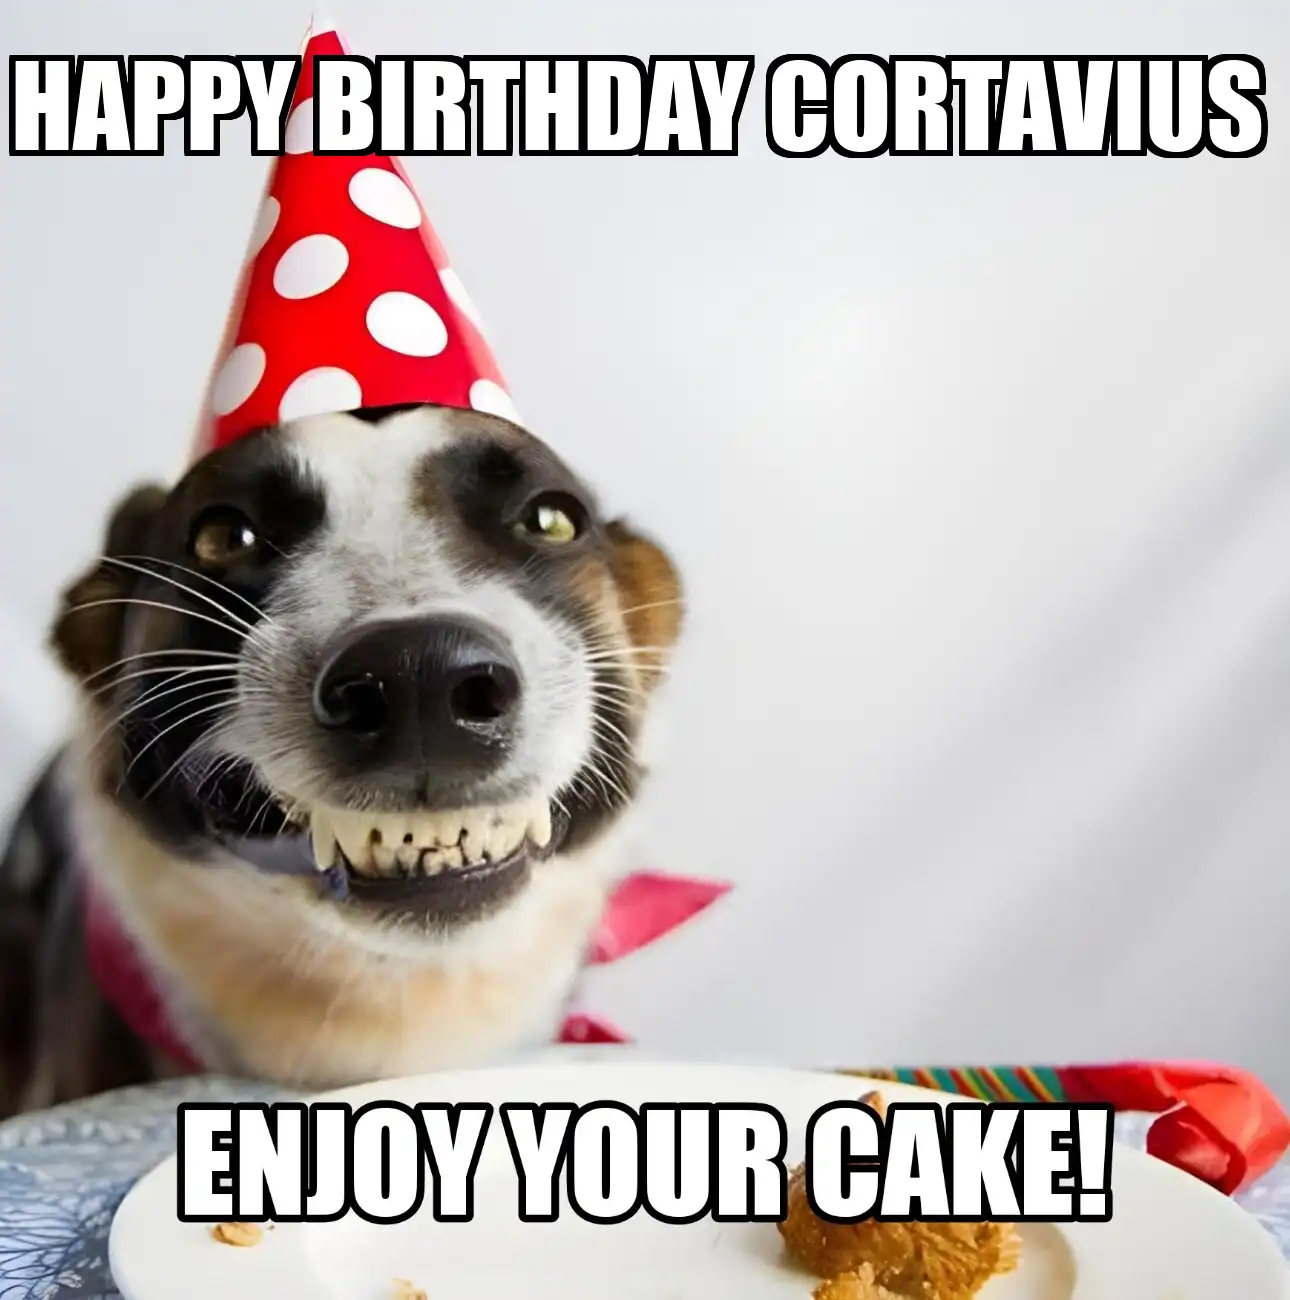 Happy Birthday Cortavius Enjoy Your Cake Dog Meme